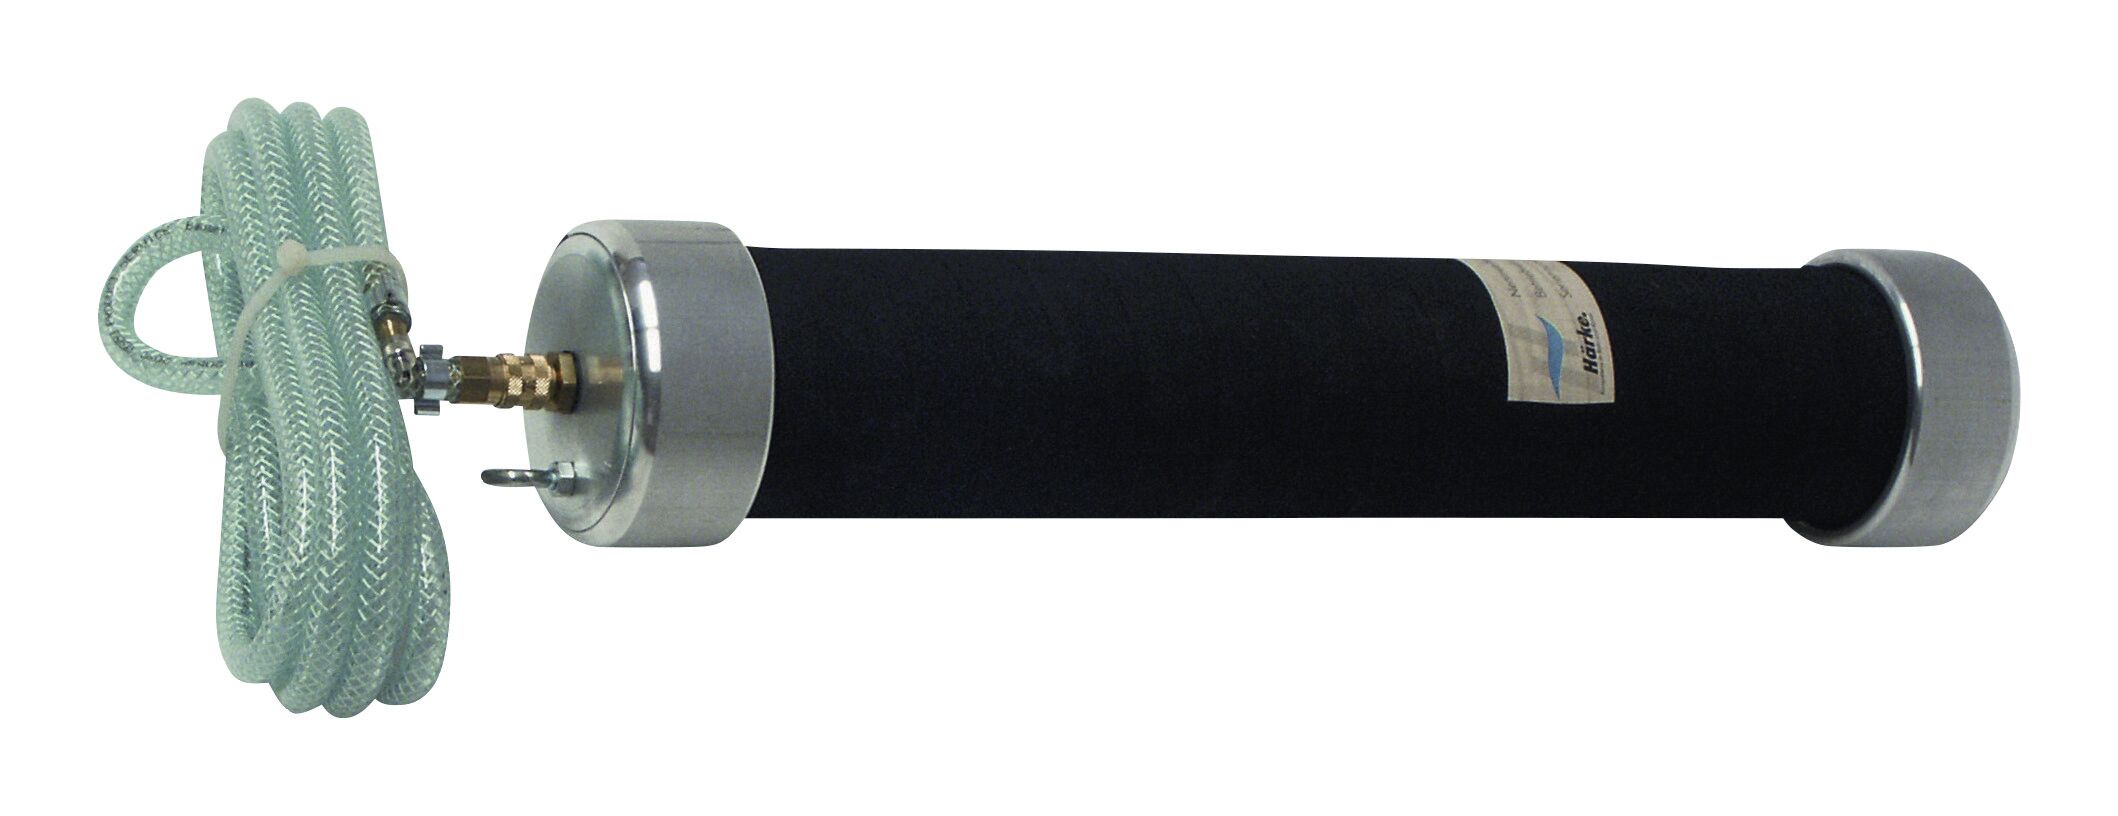 Härke Absperrblase NW 90-250 mm 155800 